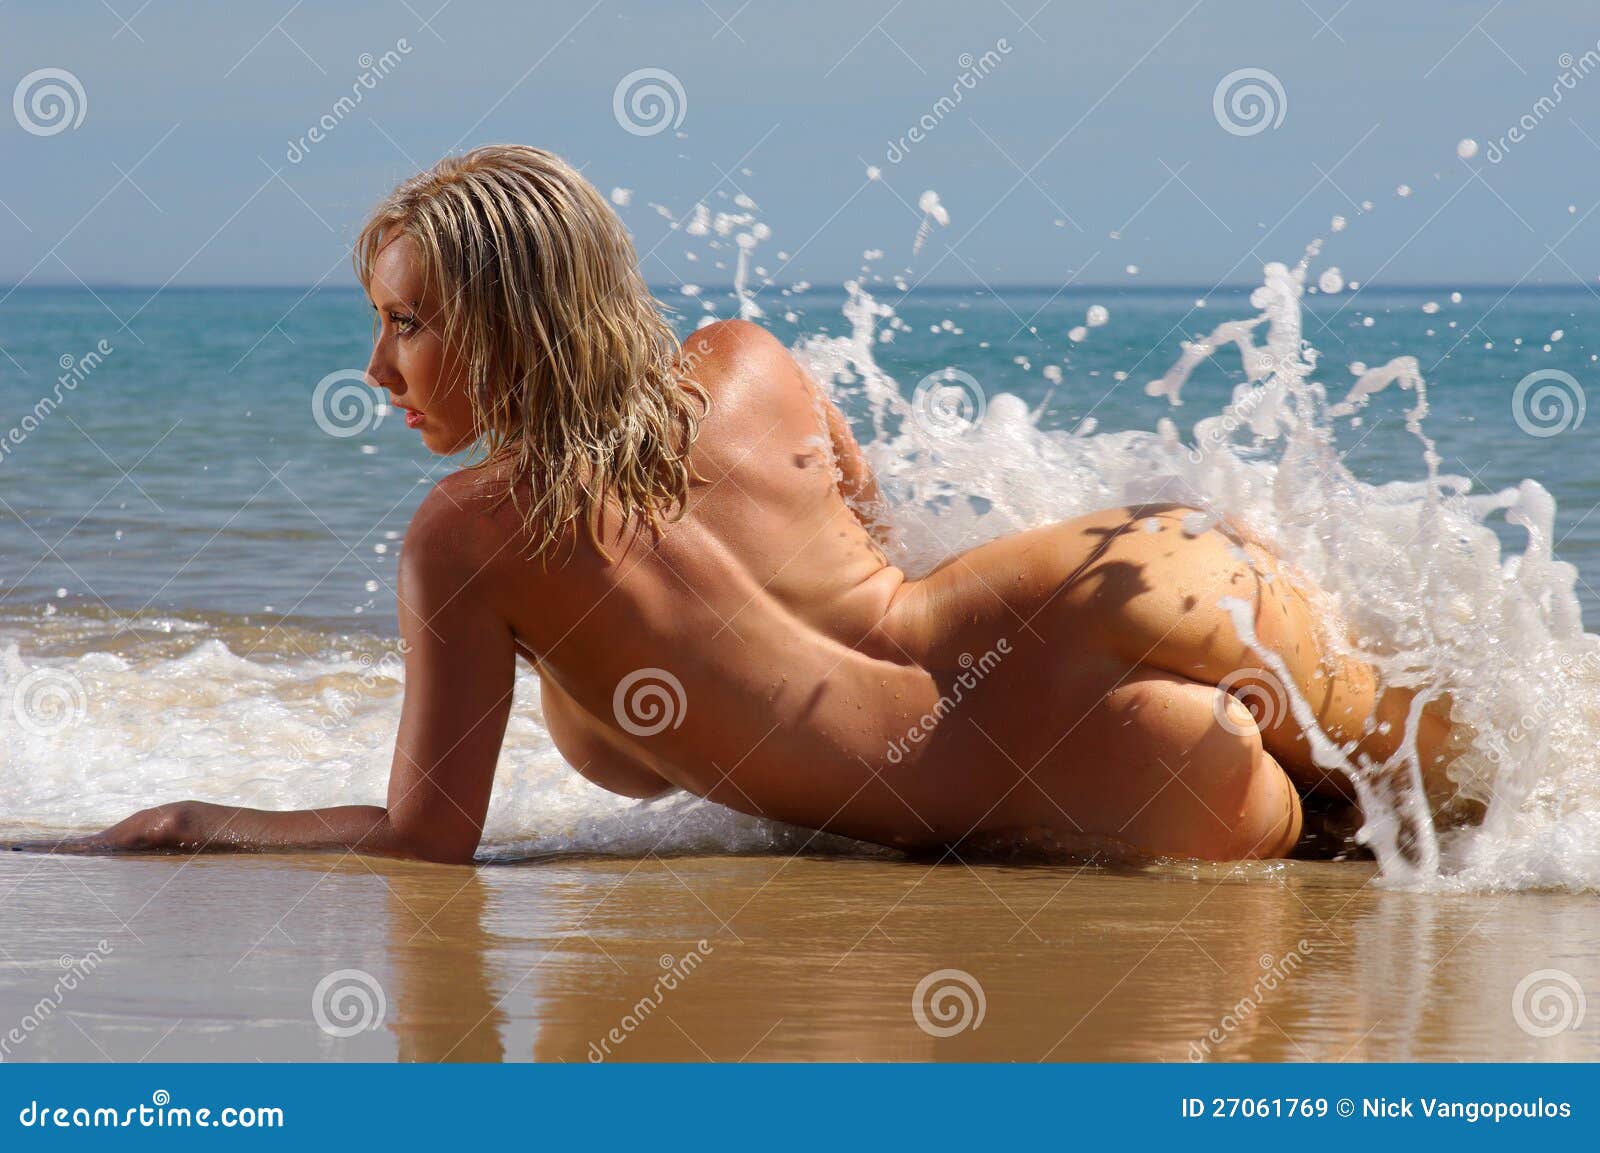 Naked group beach girls